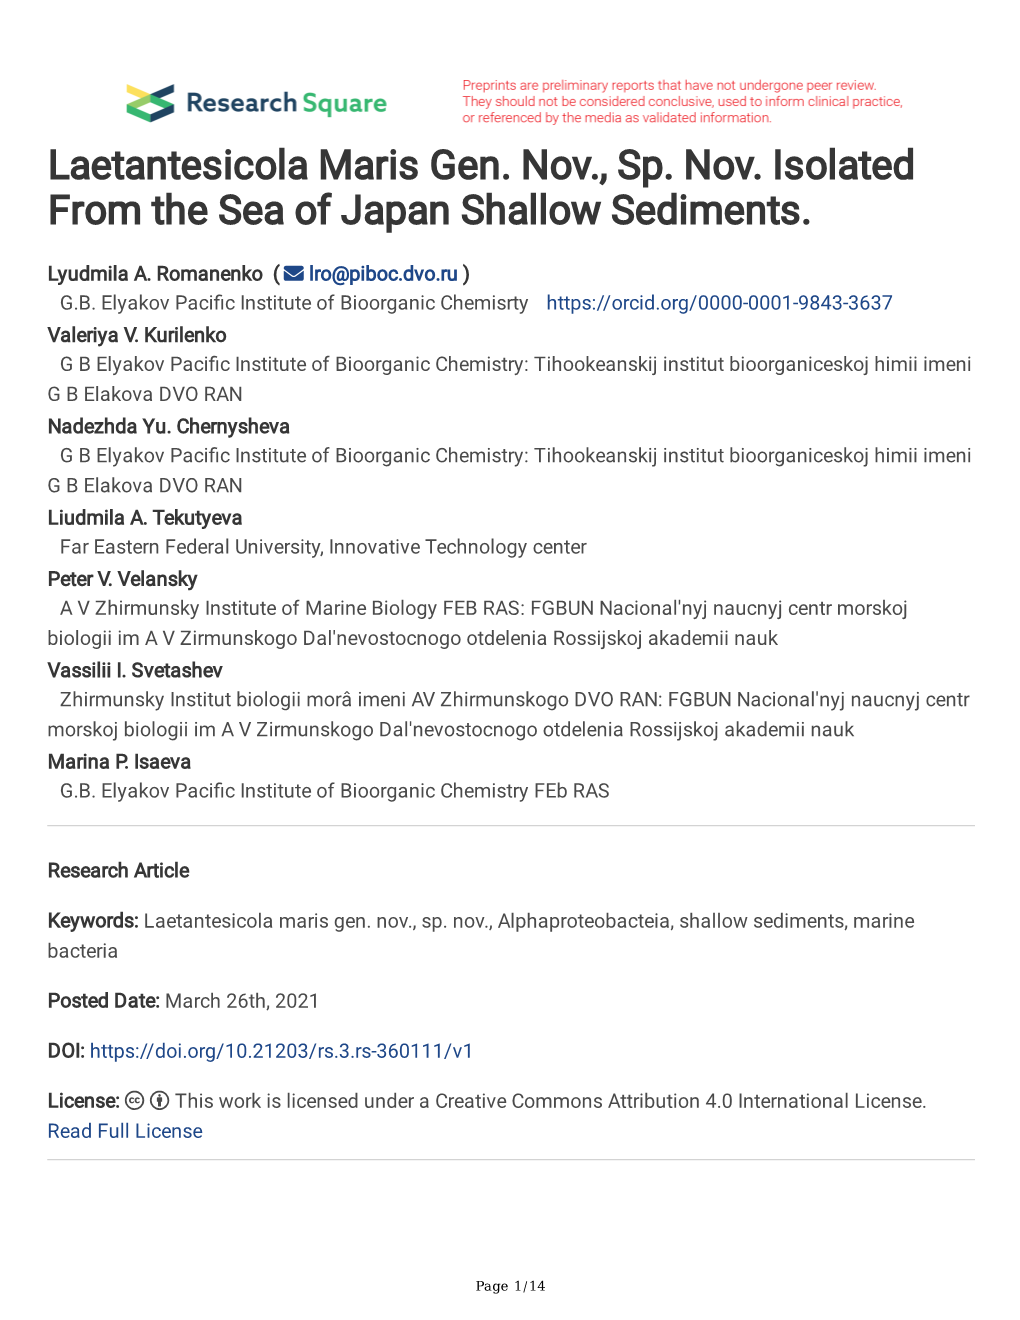 Laetantesicola Maris Gen. Nov., Sp. Nov. Isolated from the Sea of Japan Shallow Sediments